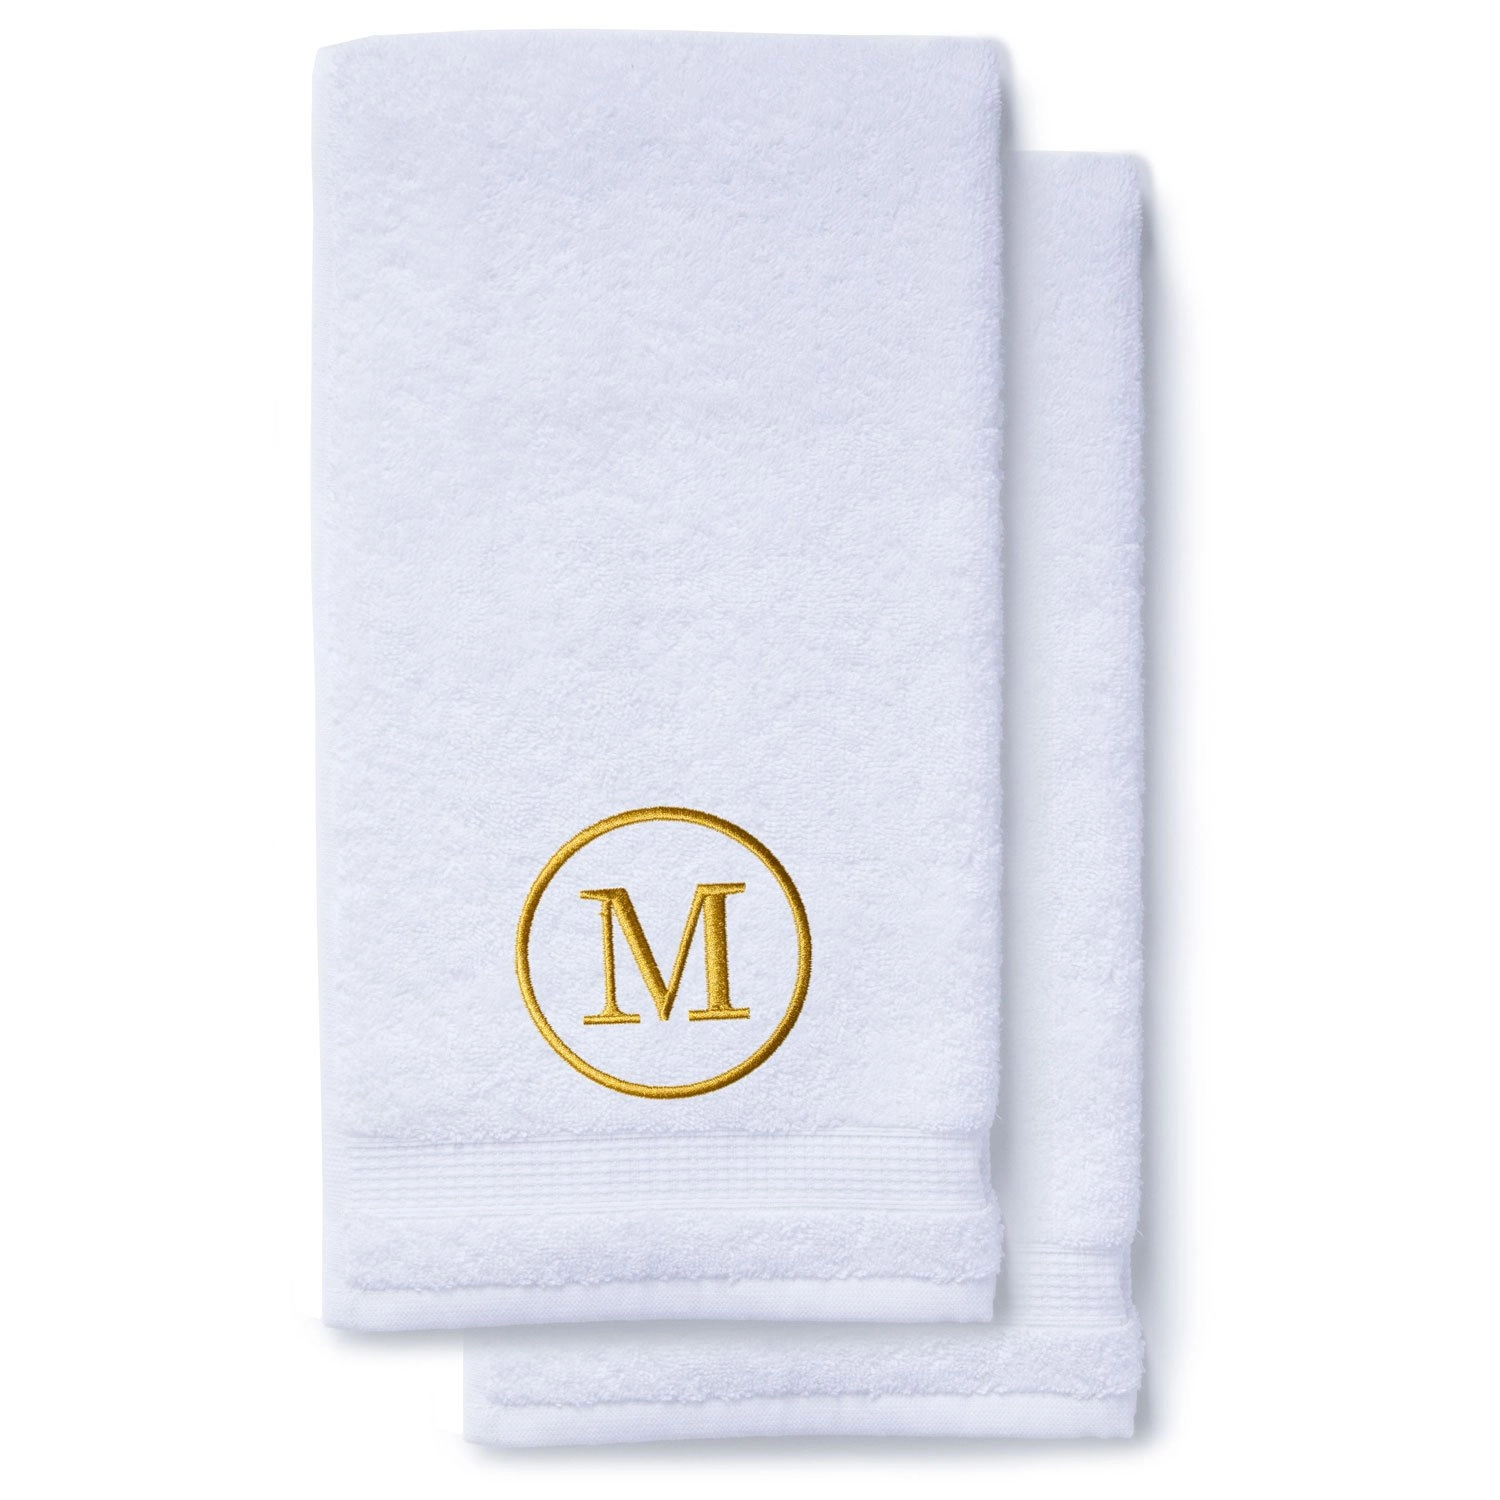 https://robemart.com/images/thumbnails/detailed/7/M-Gold-stacked-Monogrammed-Hand-Towels.webp